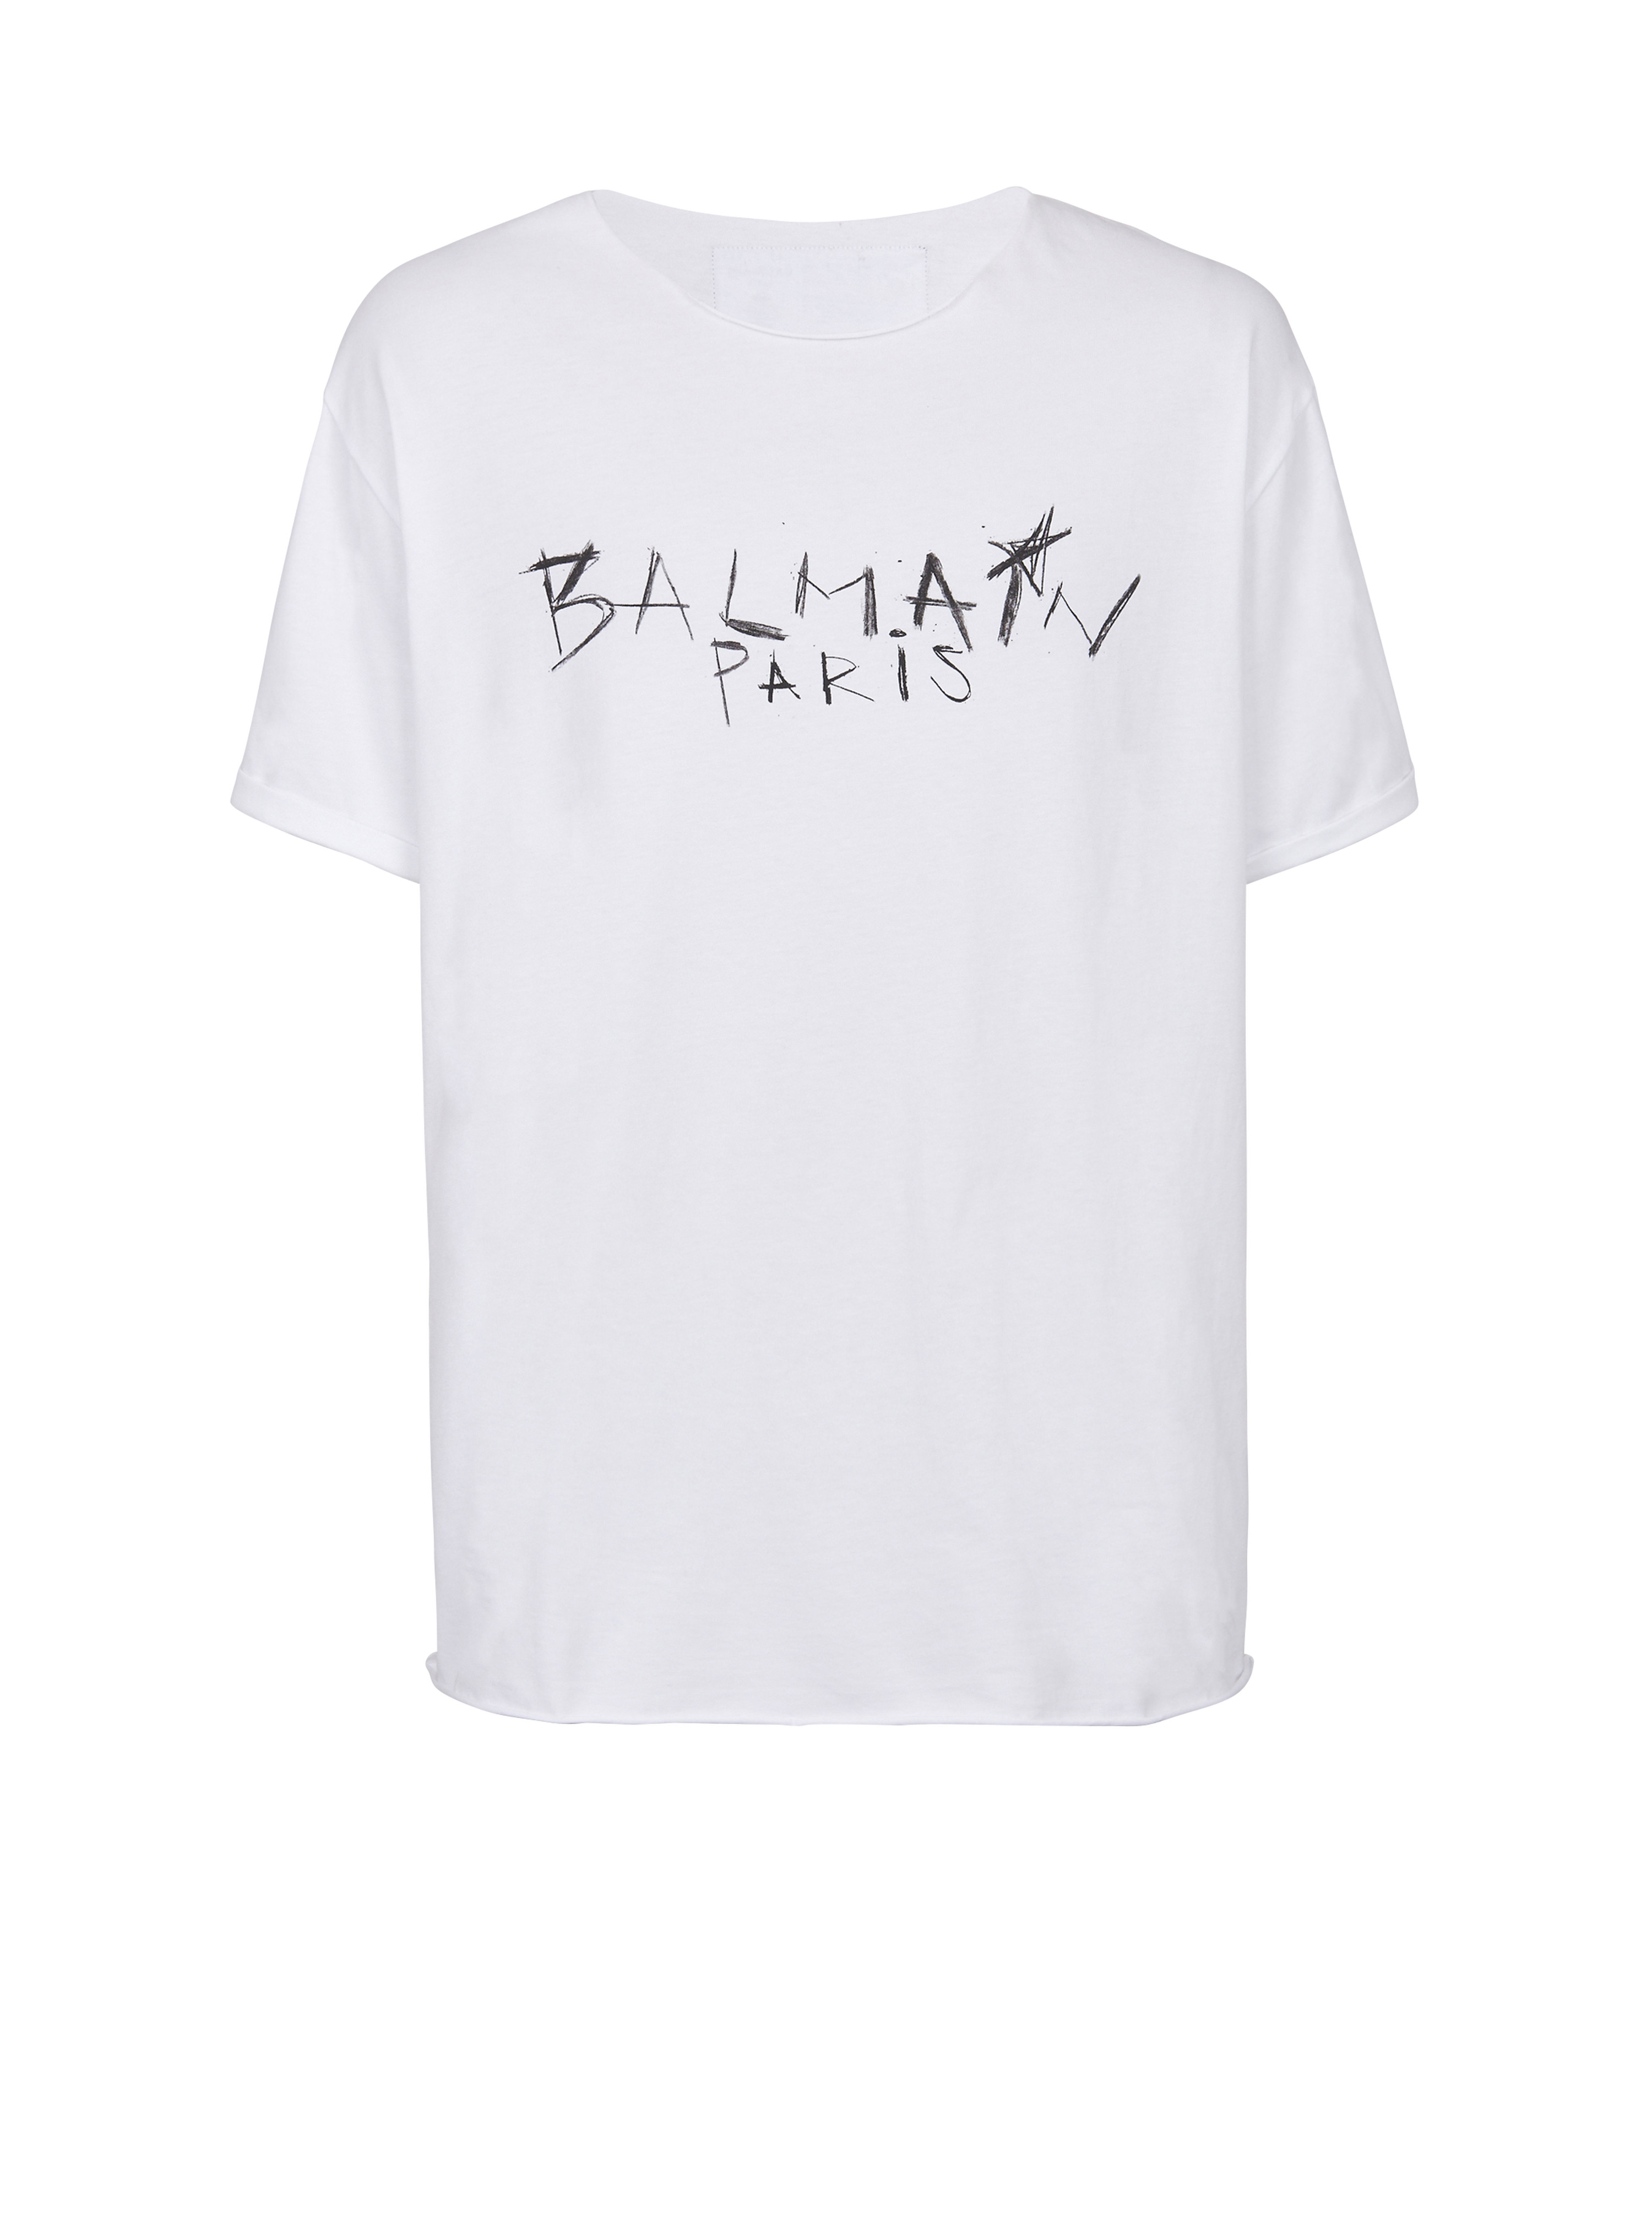 T-shirt en coton imprimé logo graffiti Balmain Paris, blanc